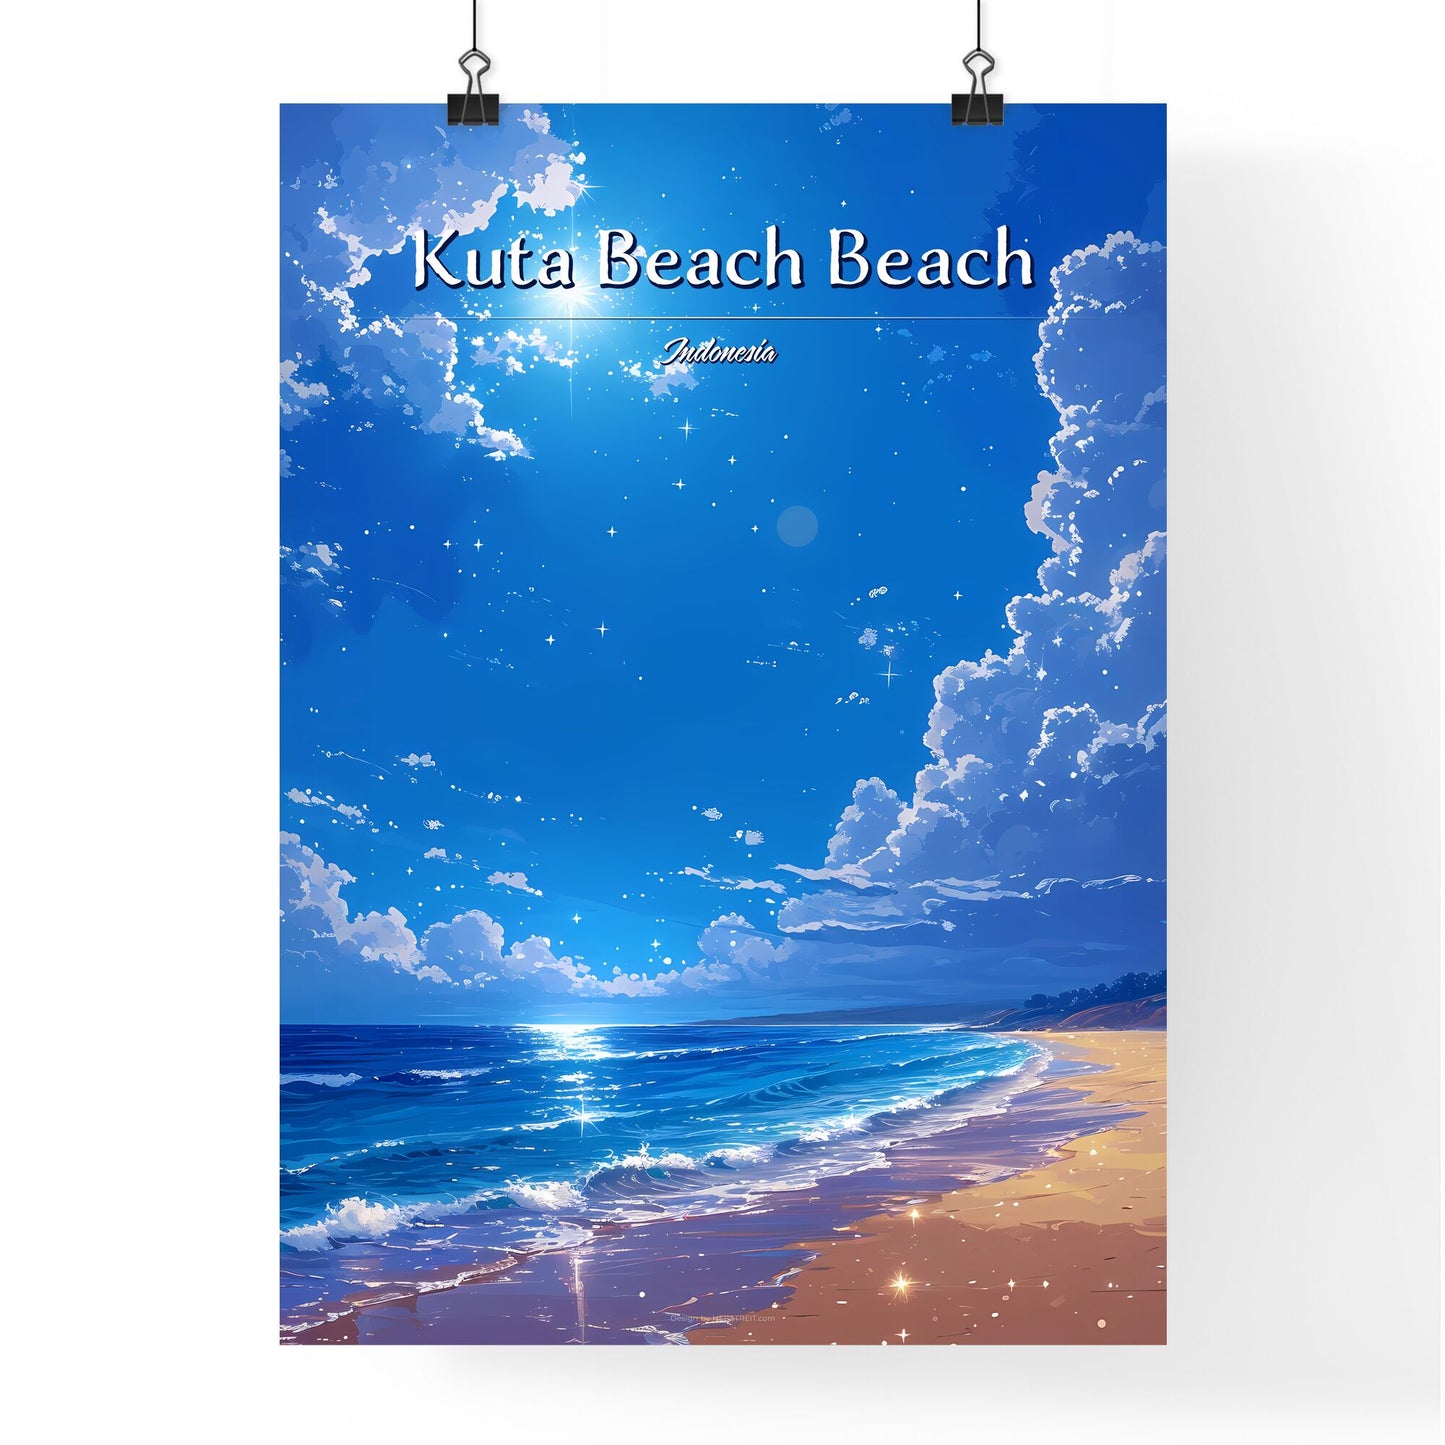 Kuta Beach Beach, Indonesia - Art print of a beach with a sandy beach and a blue sky with clouds Default Title